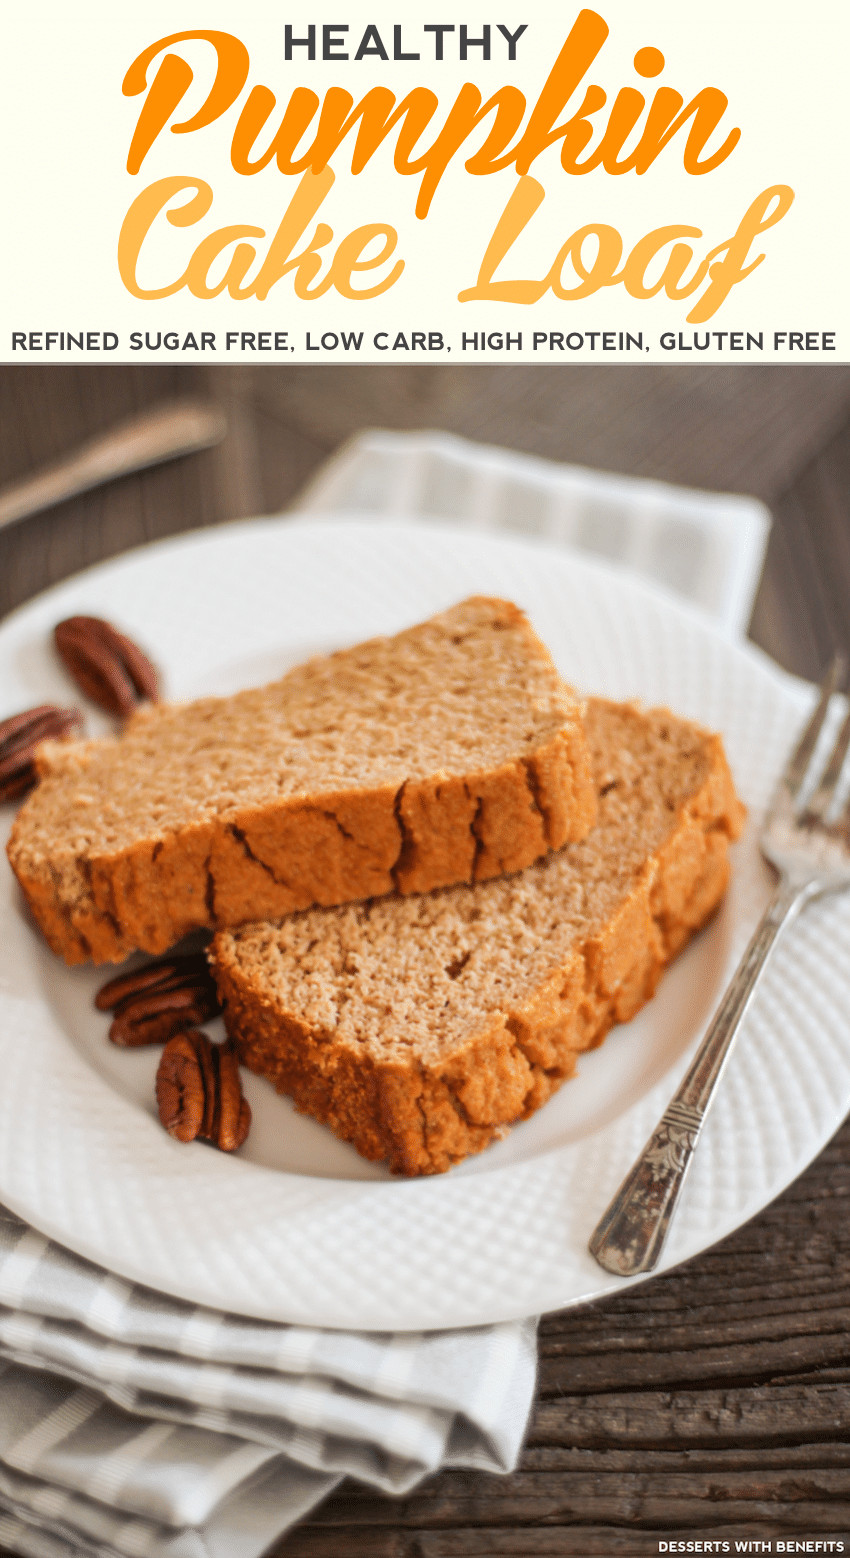 Healthy Sugar Free Desserts
 Desserts With Benefits Healthy Pumpkin Cake Loaf recipe